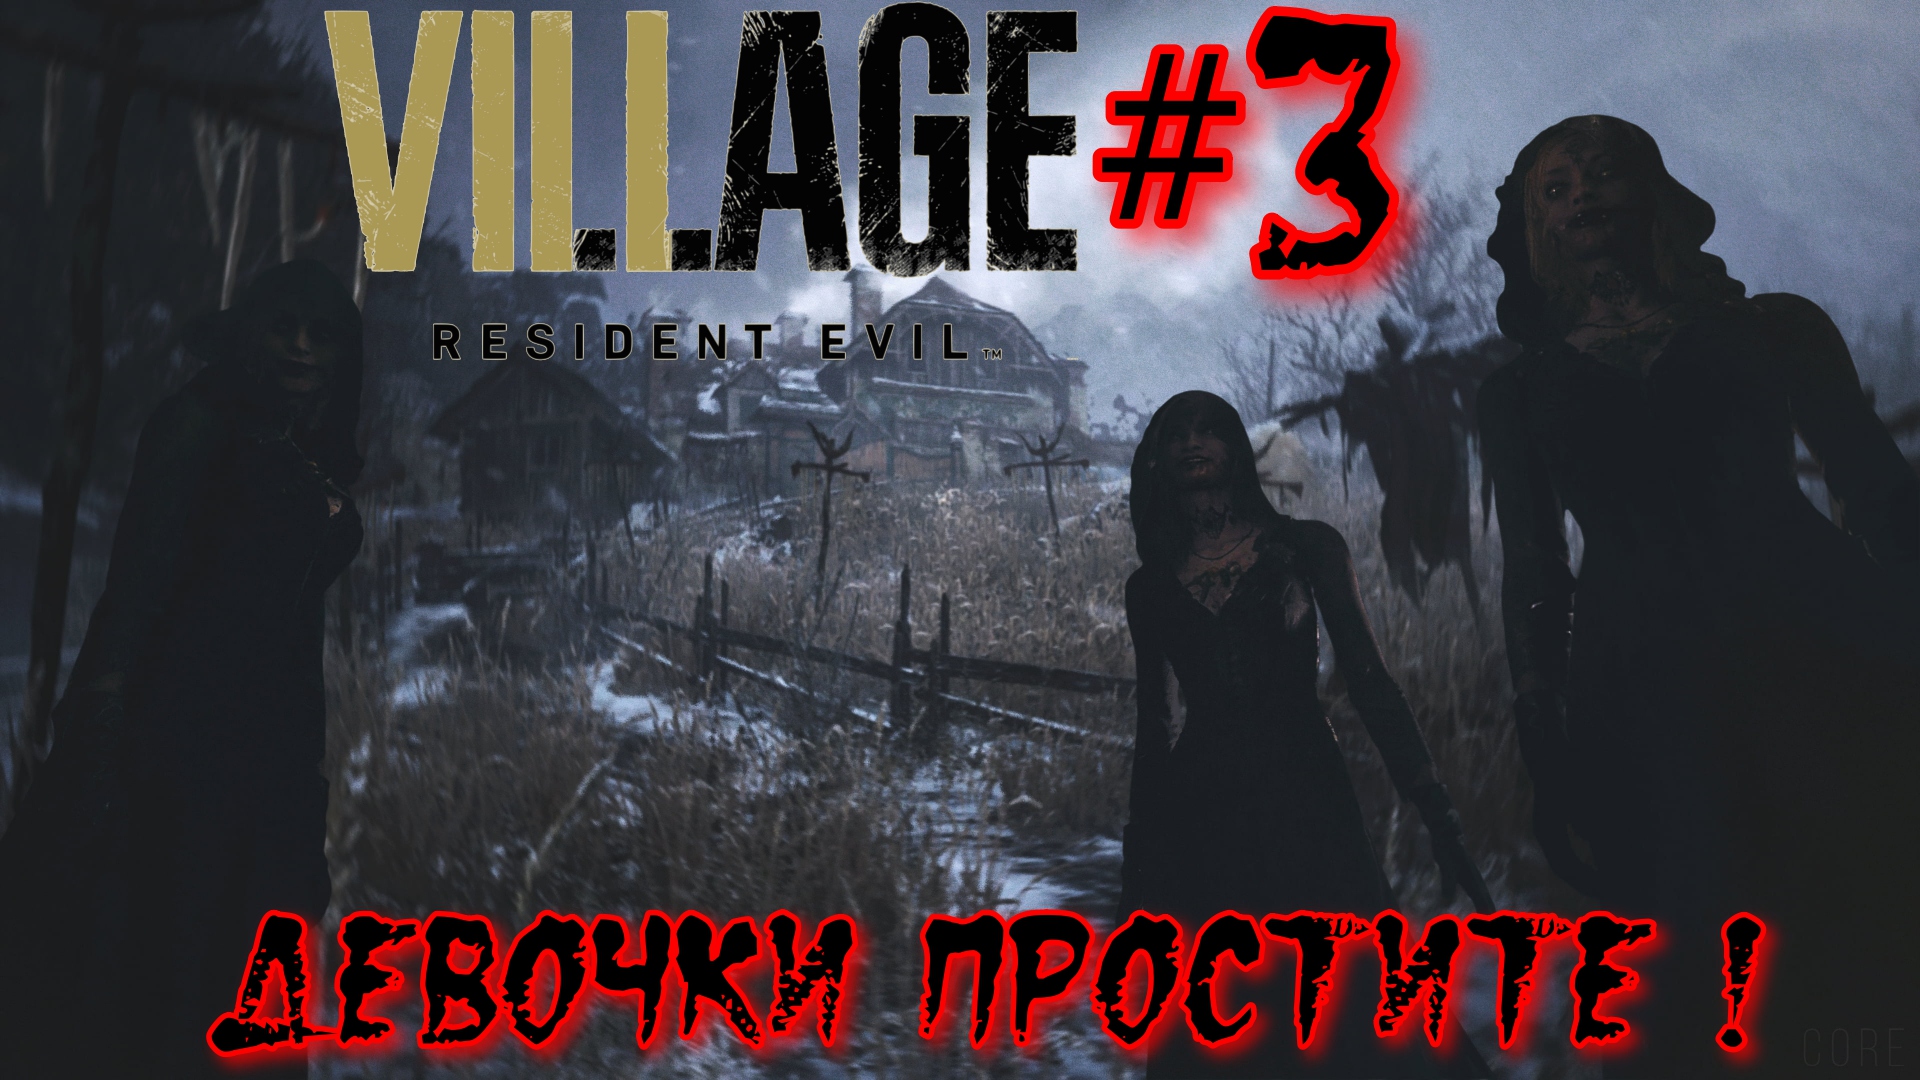 3 СЕСТРИЦЫ! (Resident Evil 8 village #3)